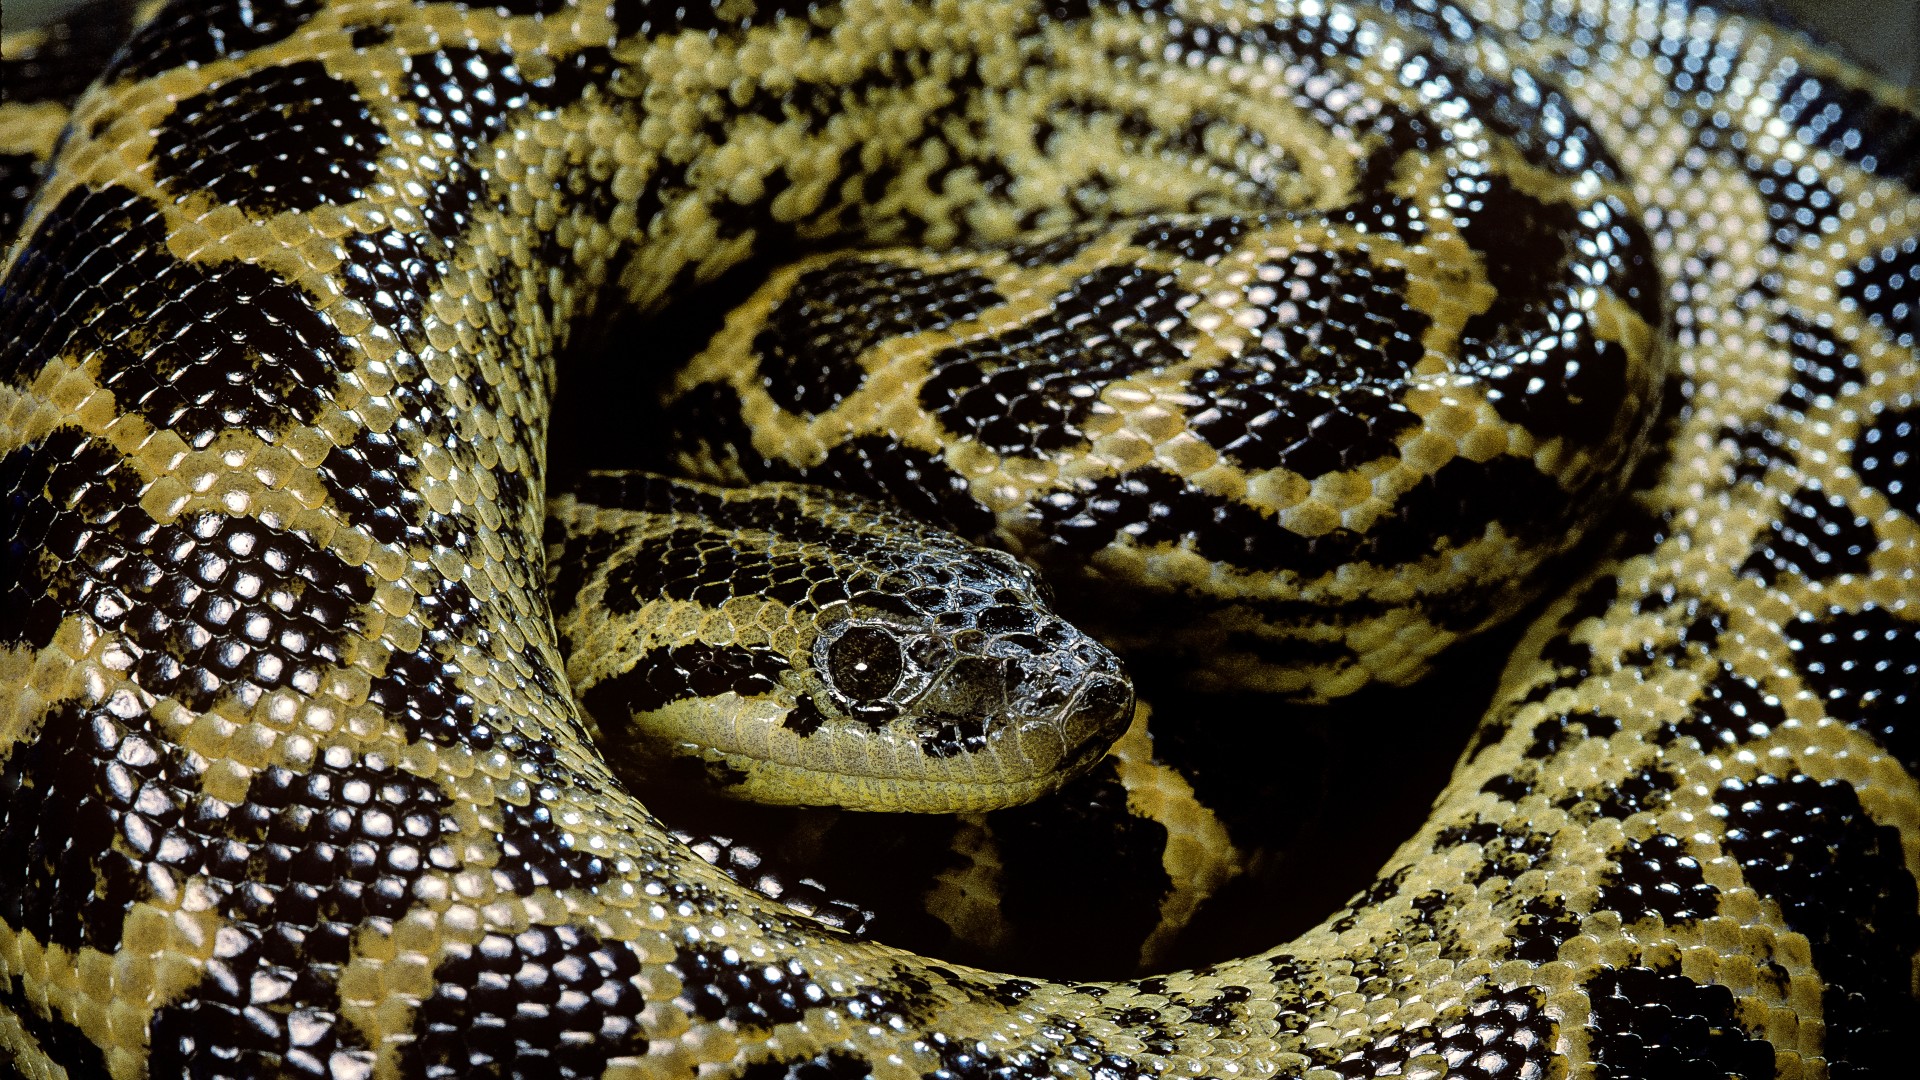 A yellow Anaconda